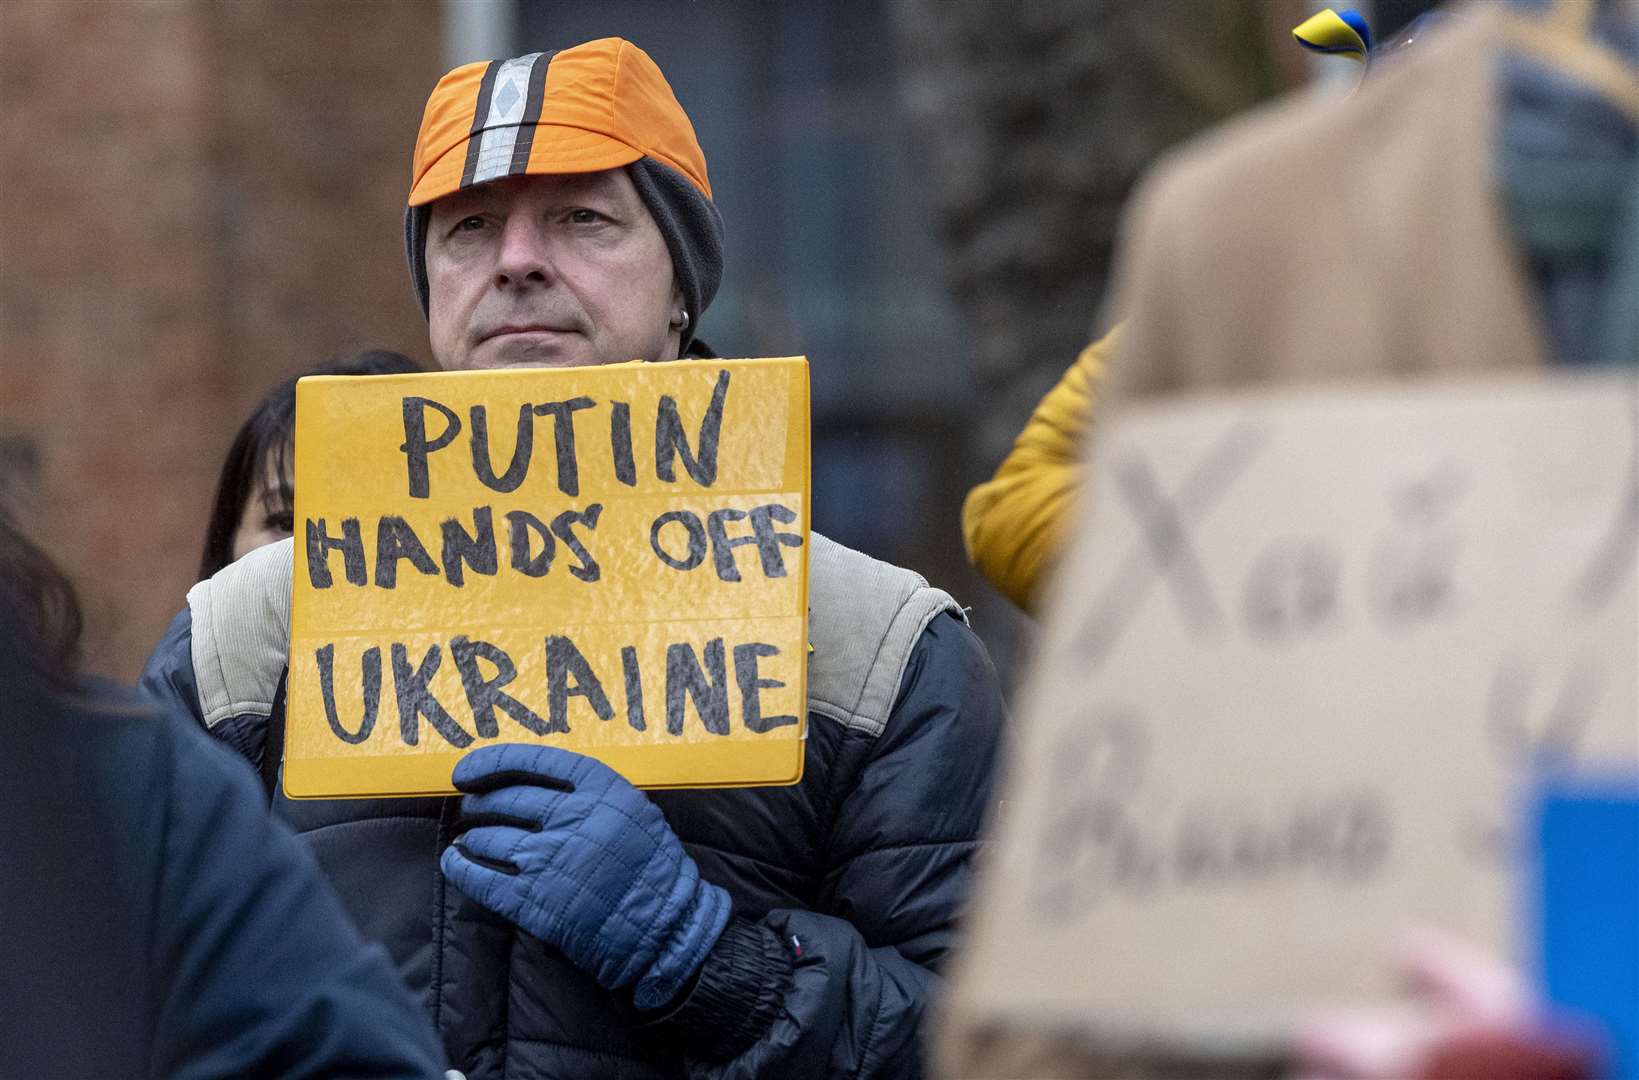 The war in Ukraine is now in its second week